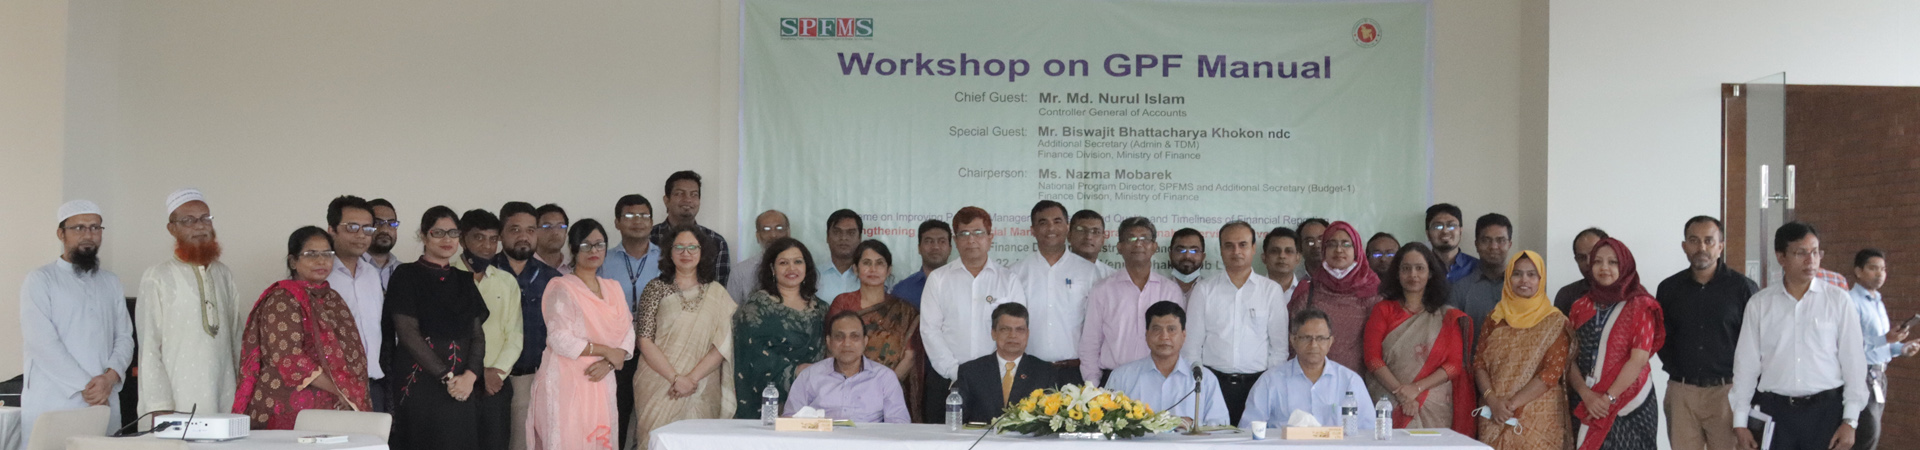 Workshop on GPF Manual 2